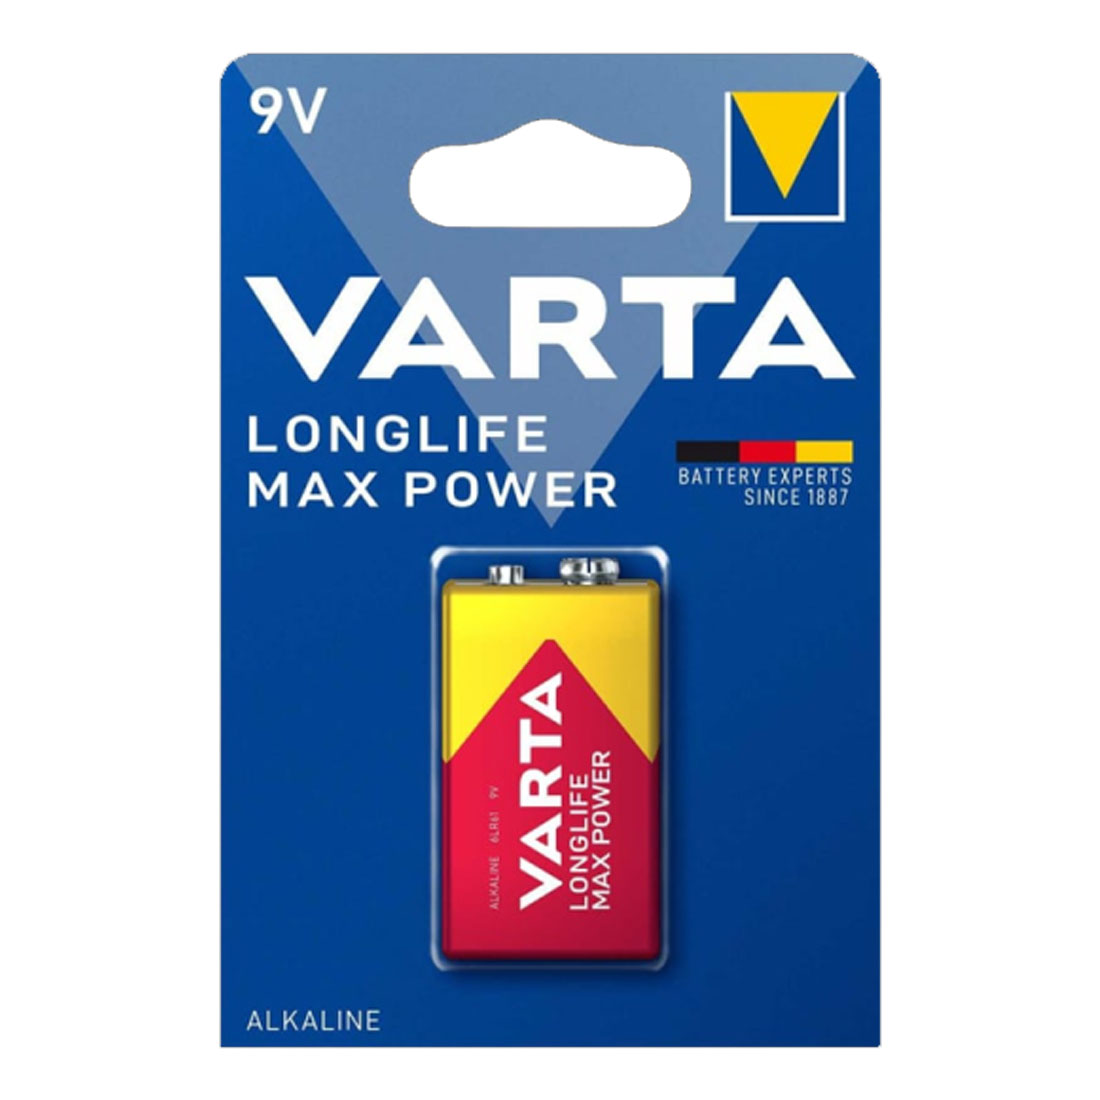 Батарейка VARTA LONGLIFE MAX POWER (MAX TECH) Крона 6LR61 BL1 Alkaline 9V